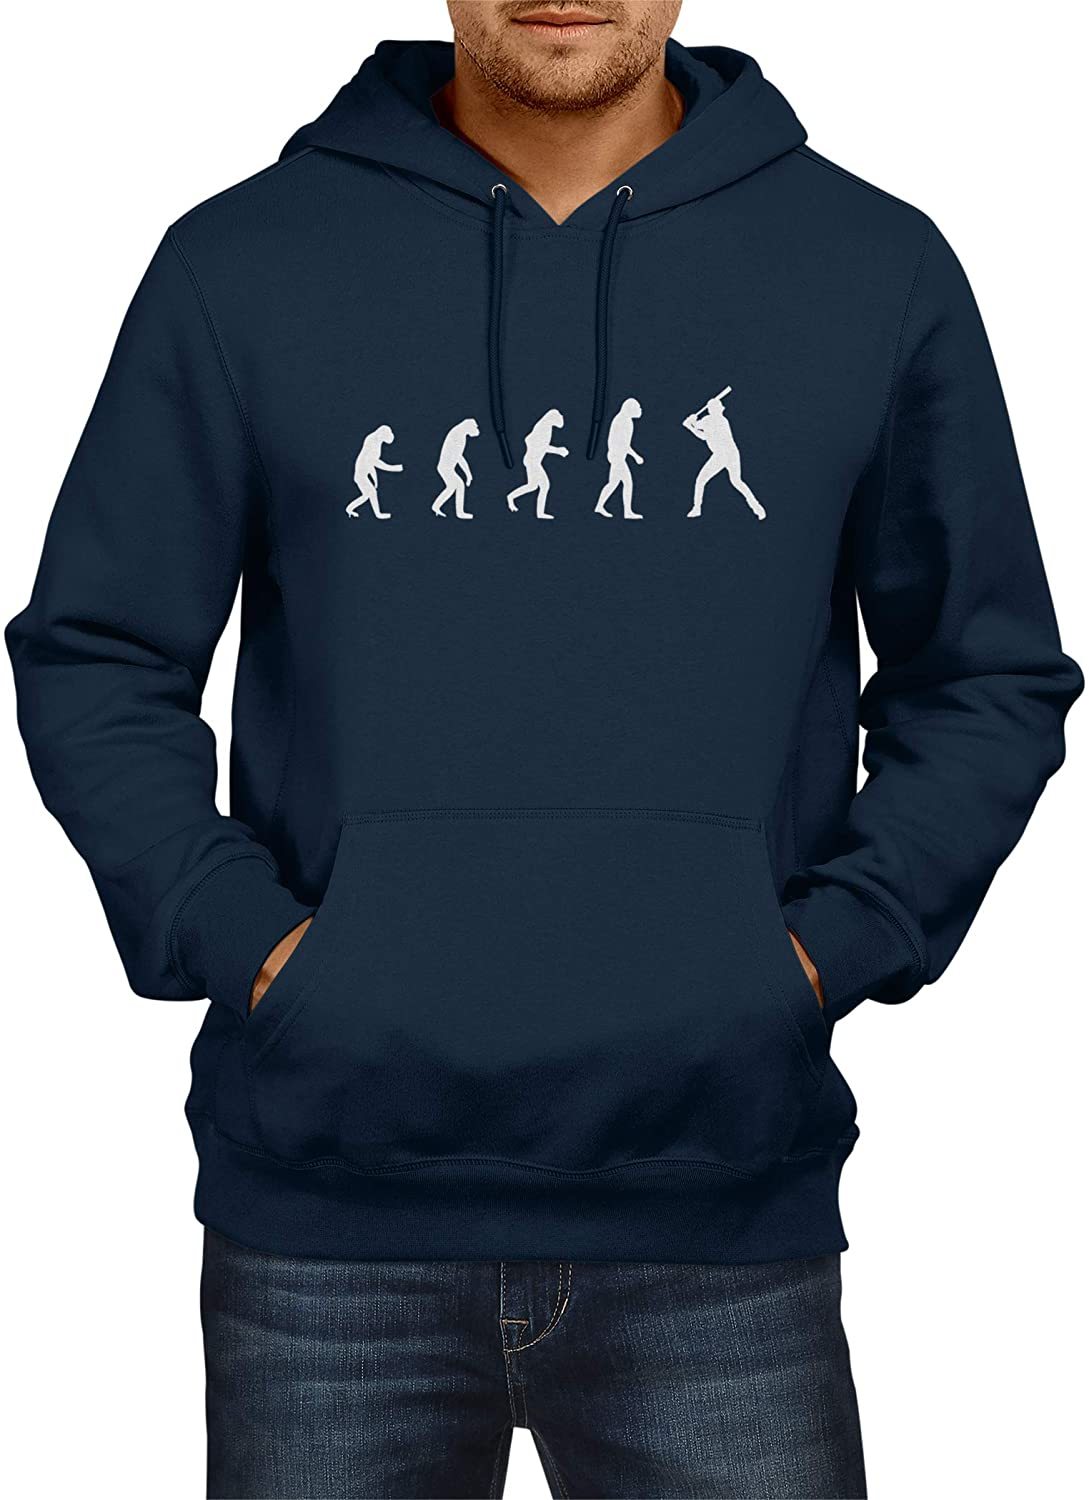 NXY Men's Evolution of Man to Baseball Player Hoodie Sweatshirt